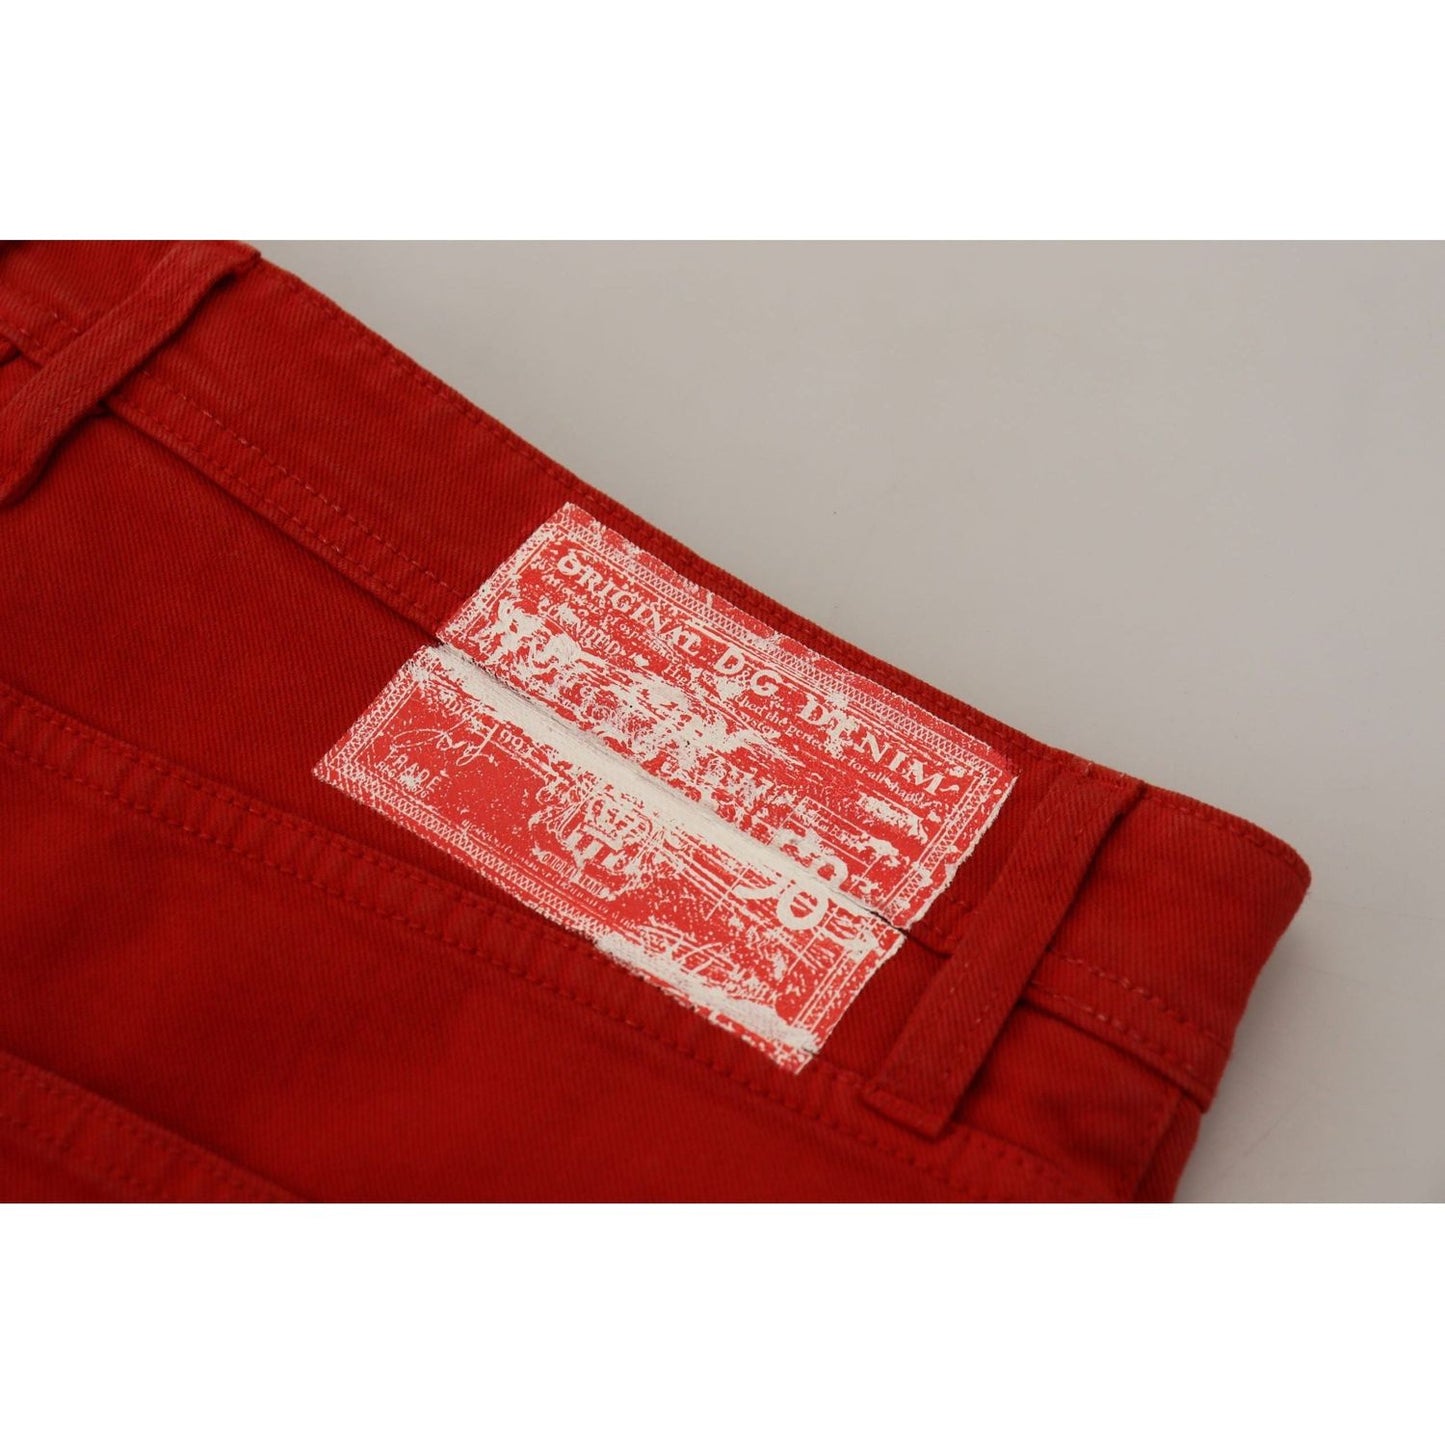 Dolce & Gabbana Chic Red Cotton Denim Pants red-cotton-straight-fit-men-denim-jeans IMG_7862-scaled-f6b4dc19-4ba.jpg